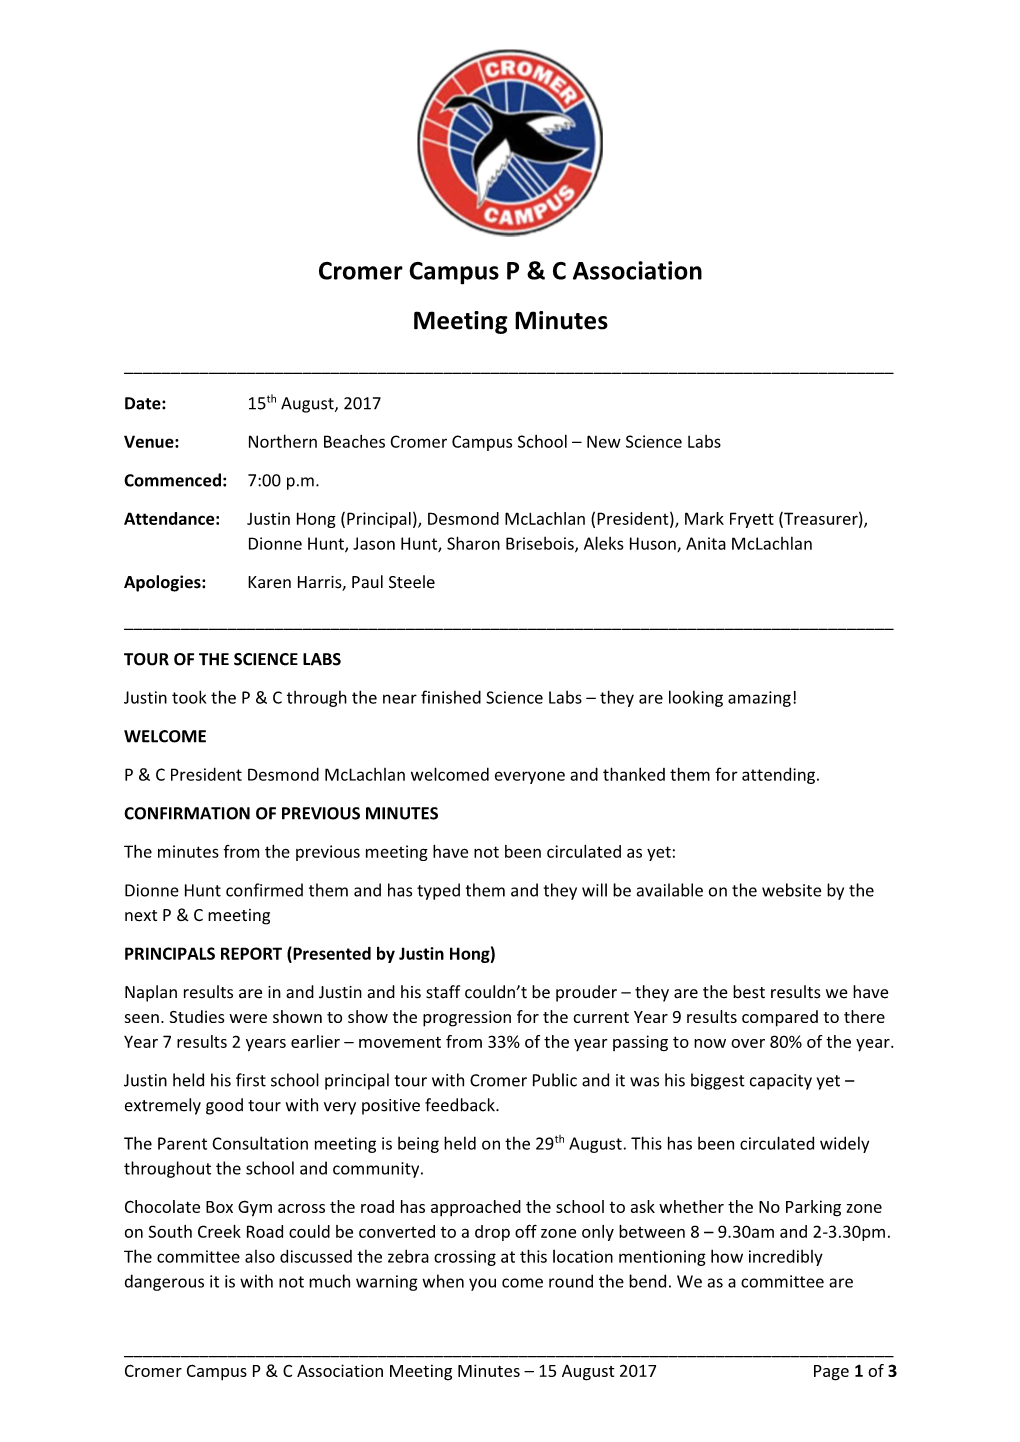 Cromer Campus P & C Association Meeting Minutes